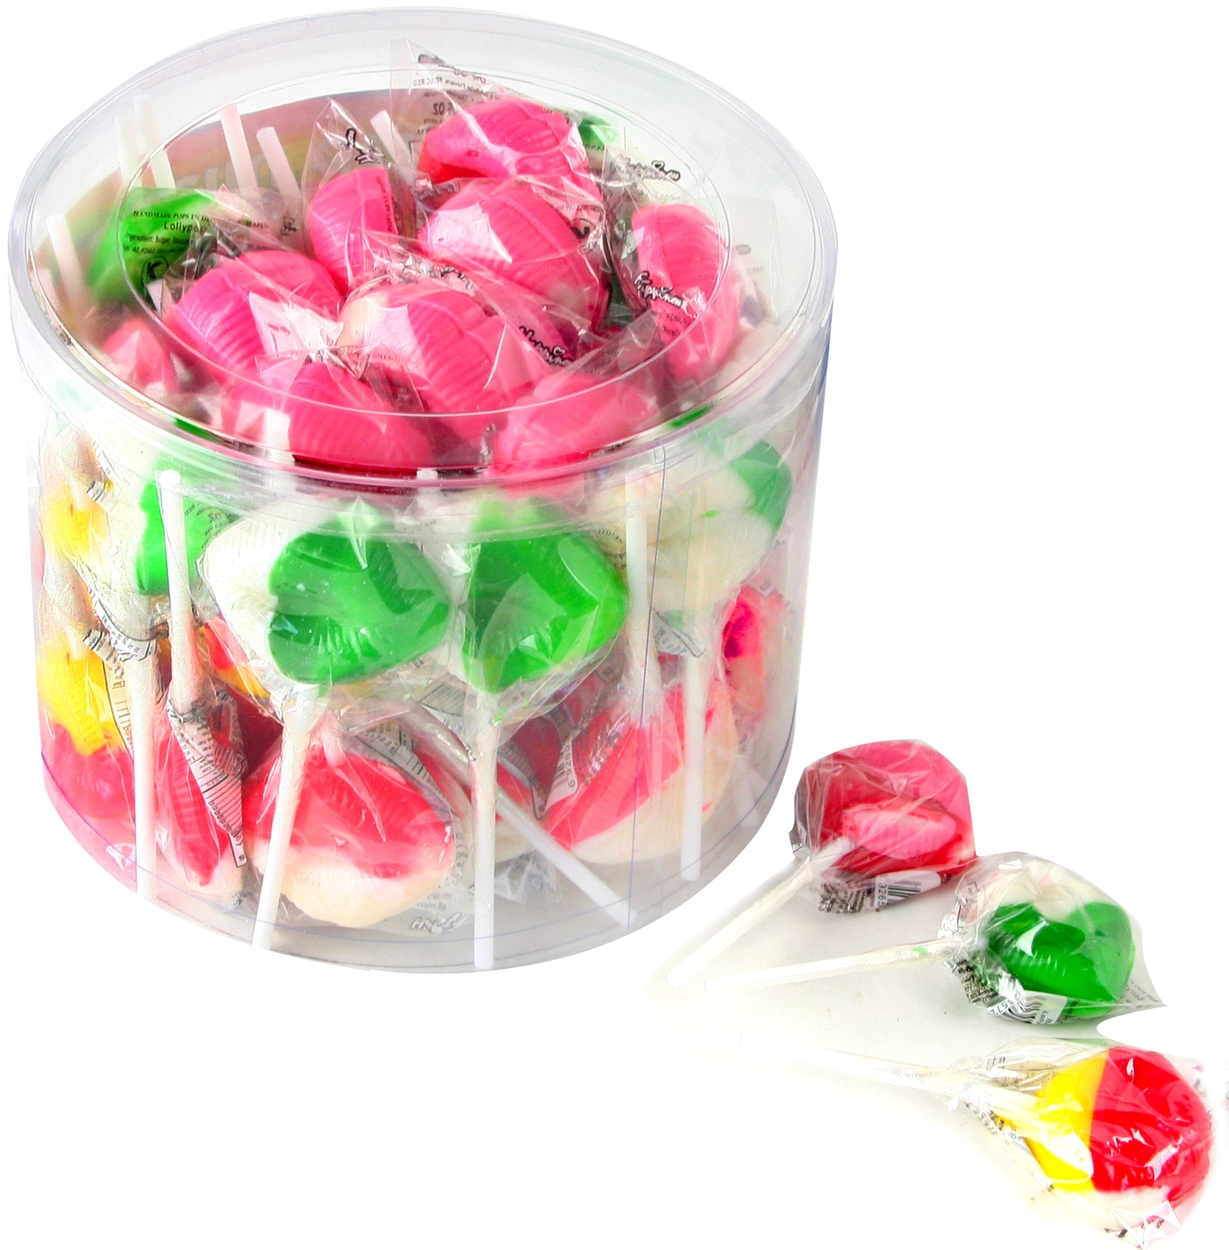 Wack-O-Wax Lips Candy - 24CT Box • Oh! Nuts®